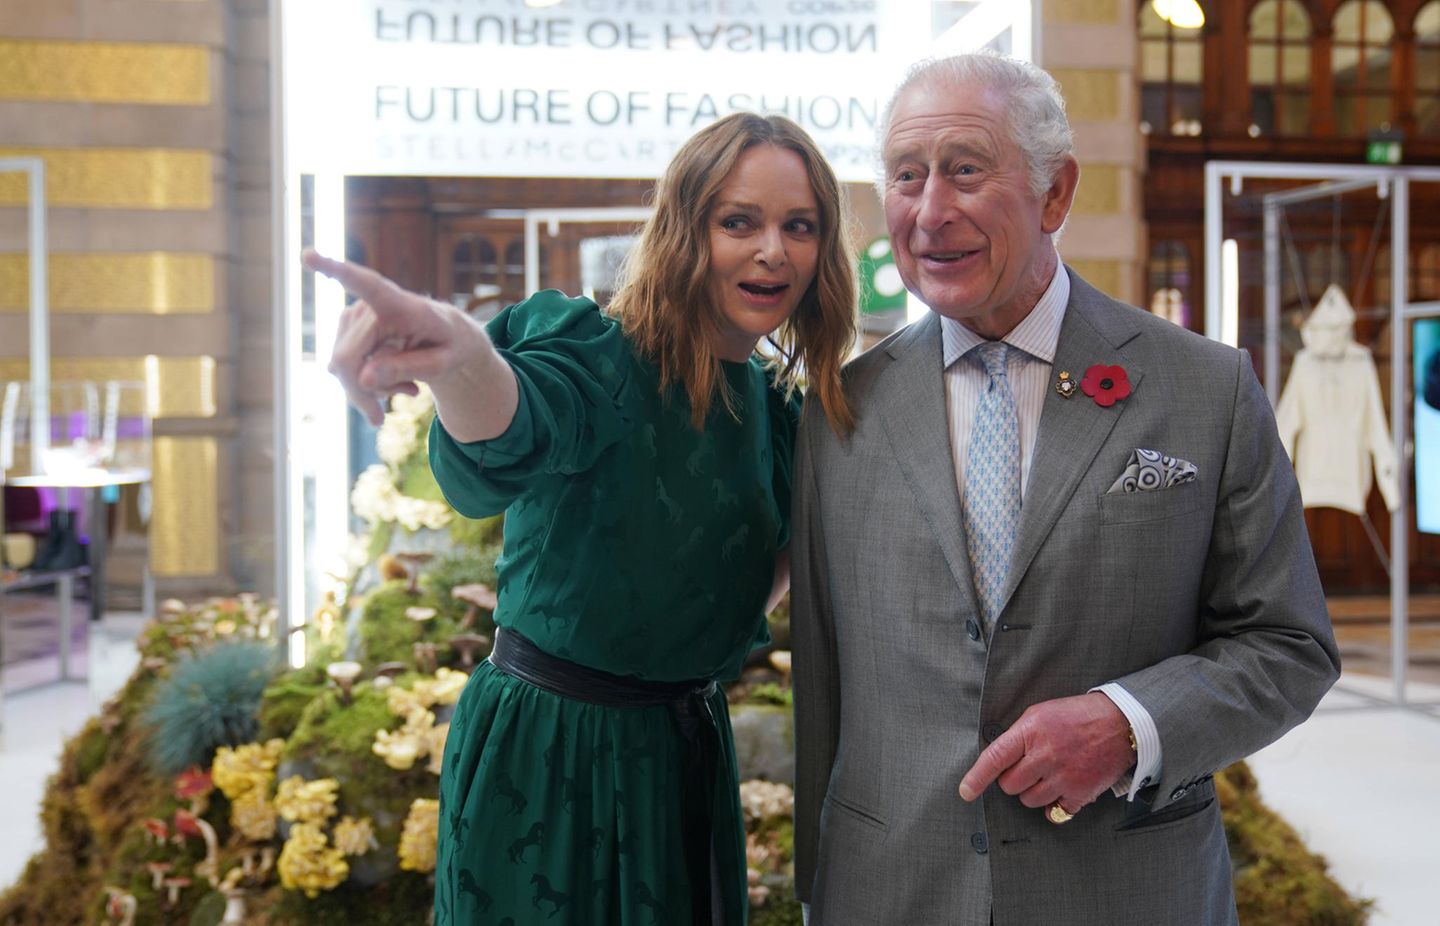 Windsor RTK: Prinz Charles und Stella McCartney